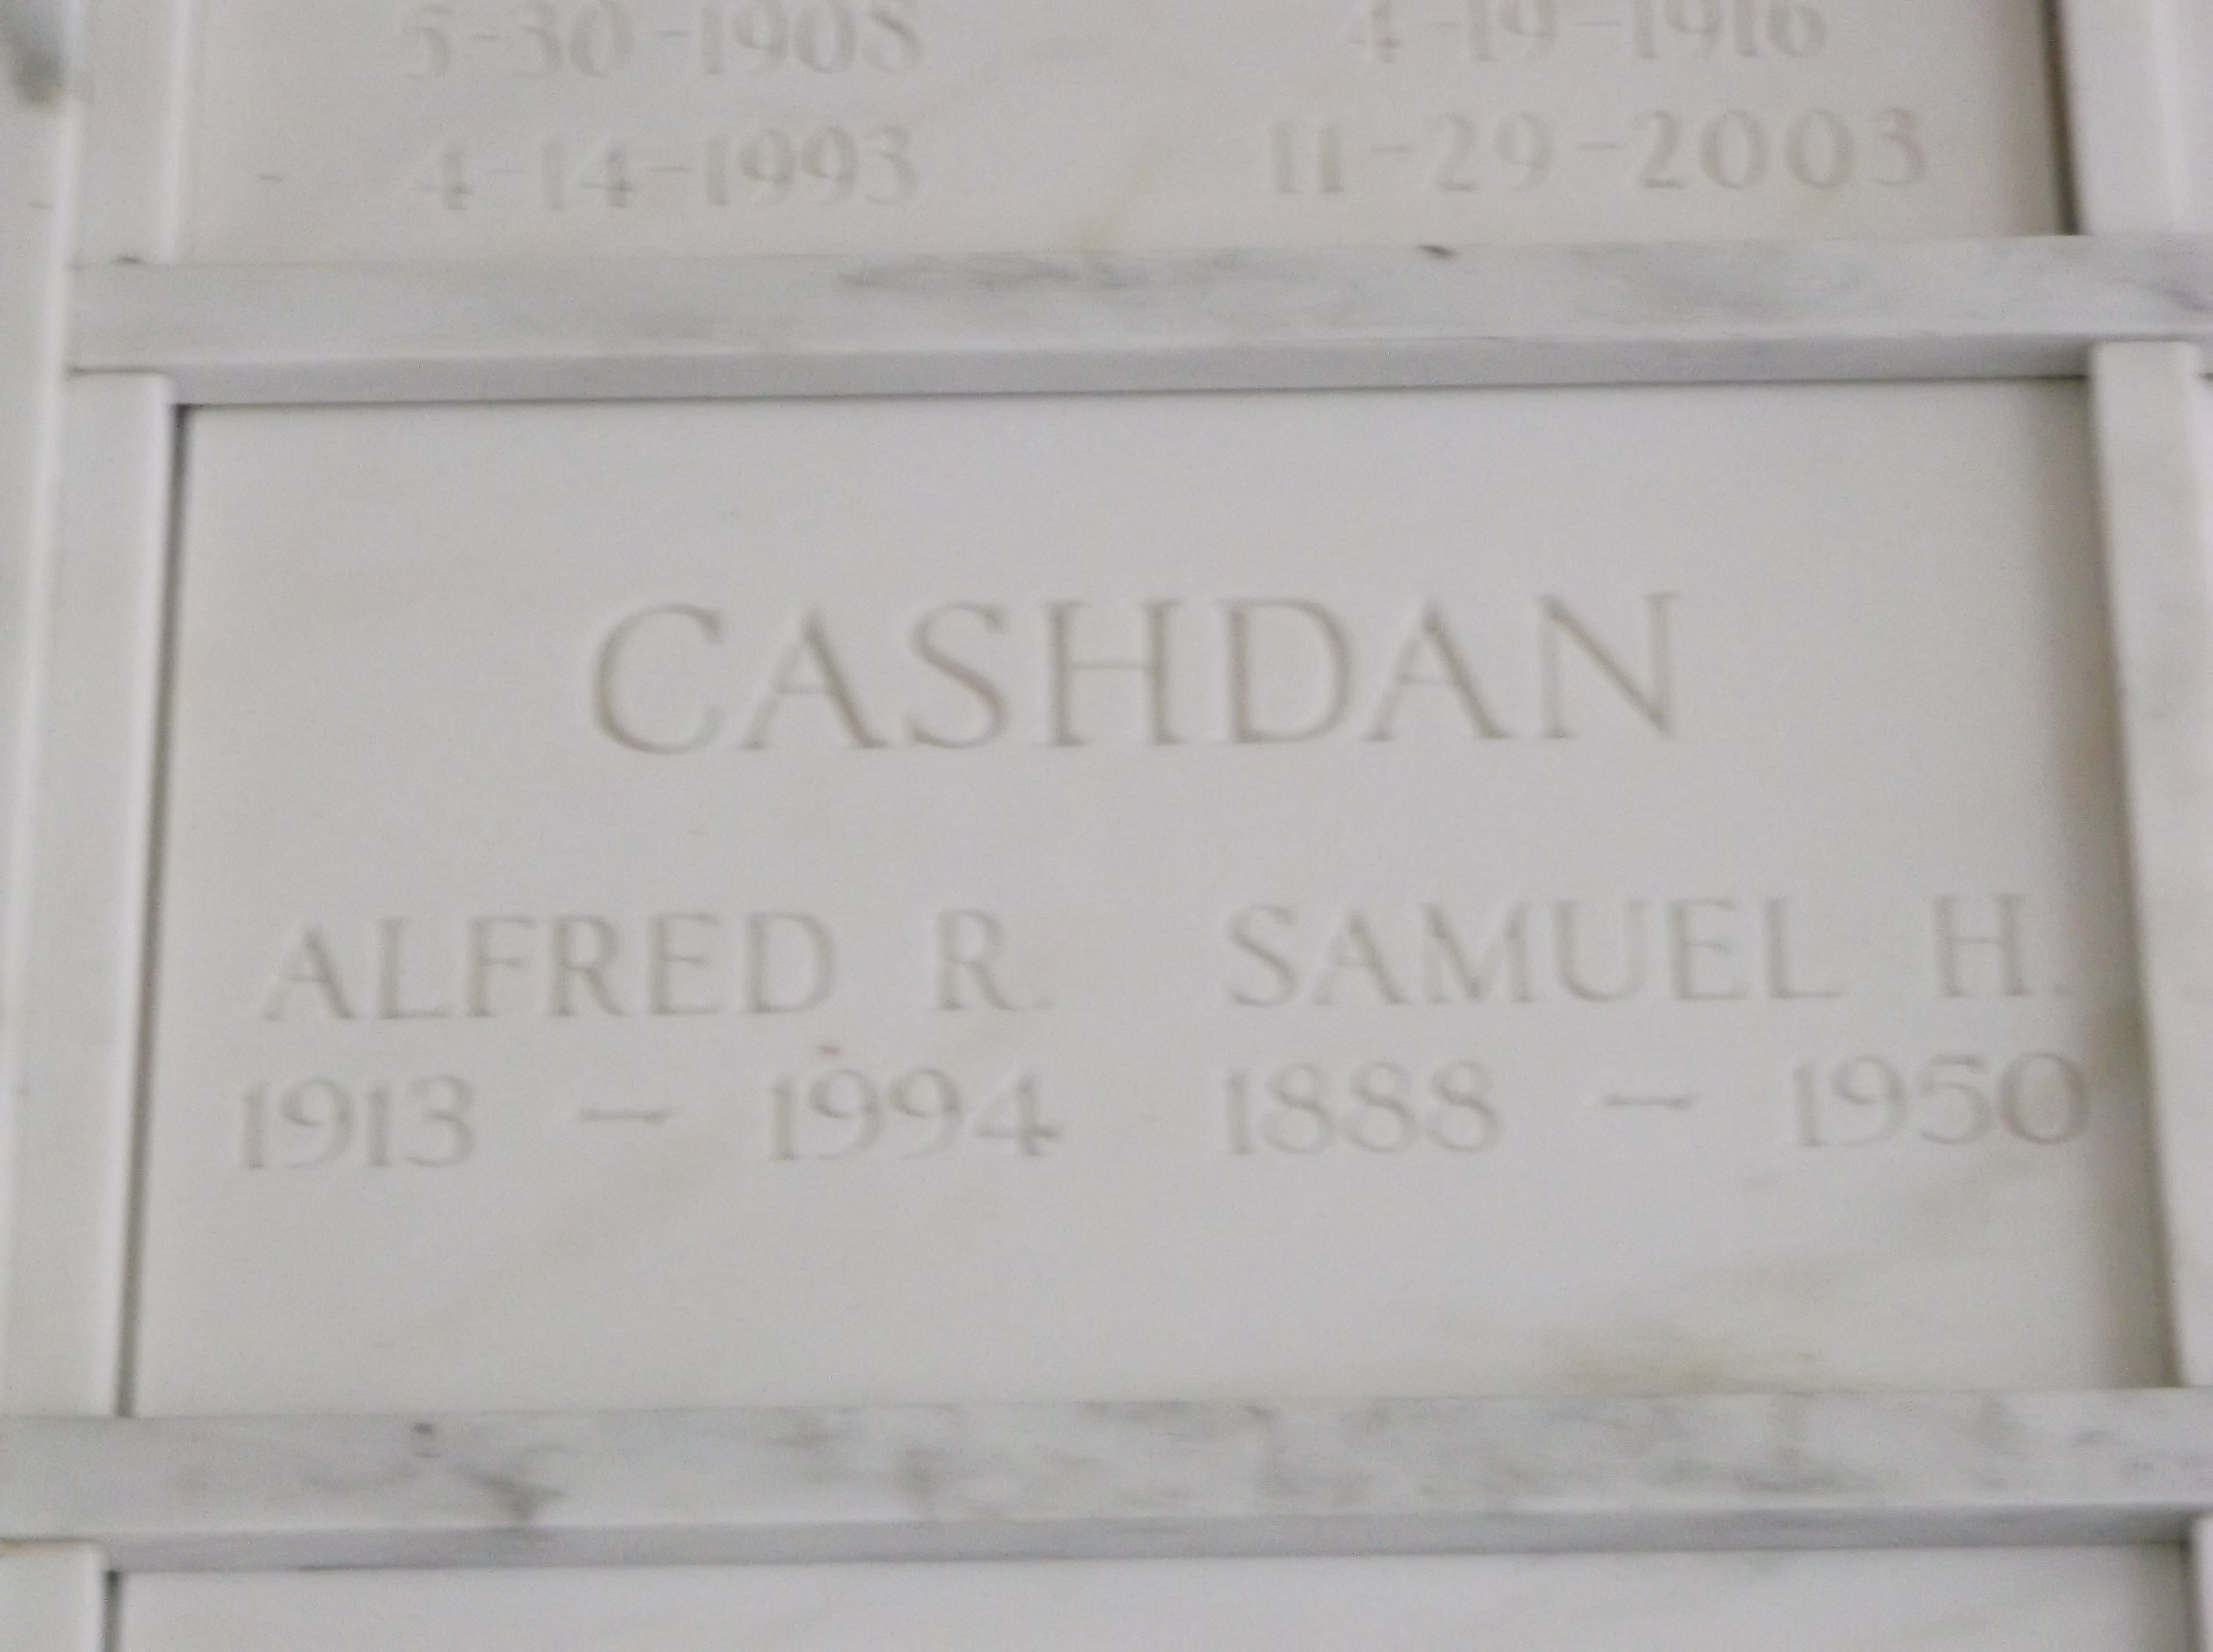 Samuel H Cashdan